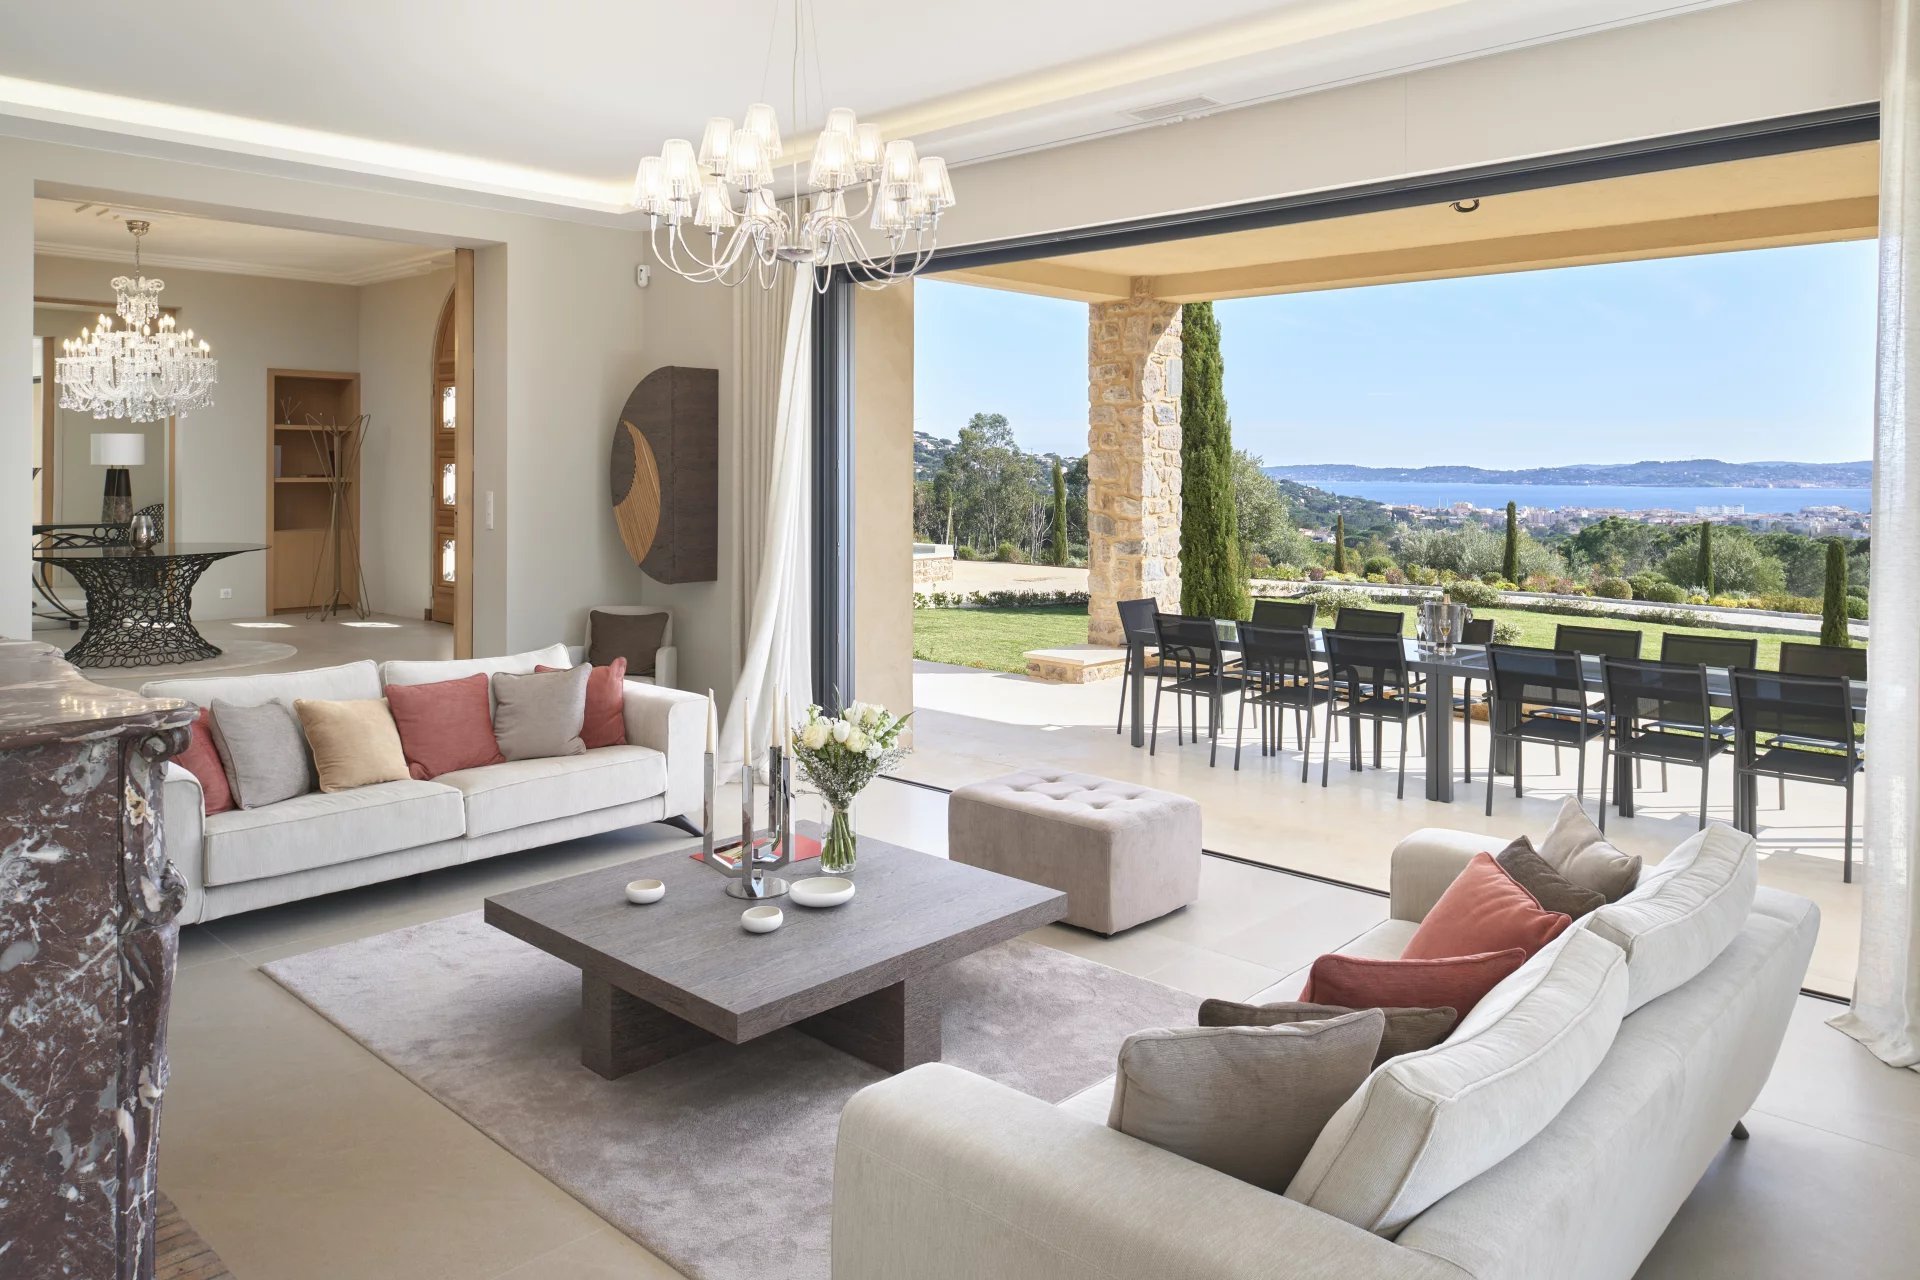 Francis York Luxury Villa Overlooking the Bay of Saint Tropez, French Riviera 8.jpg